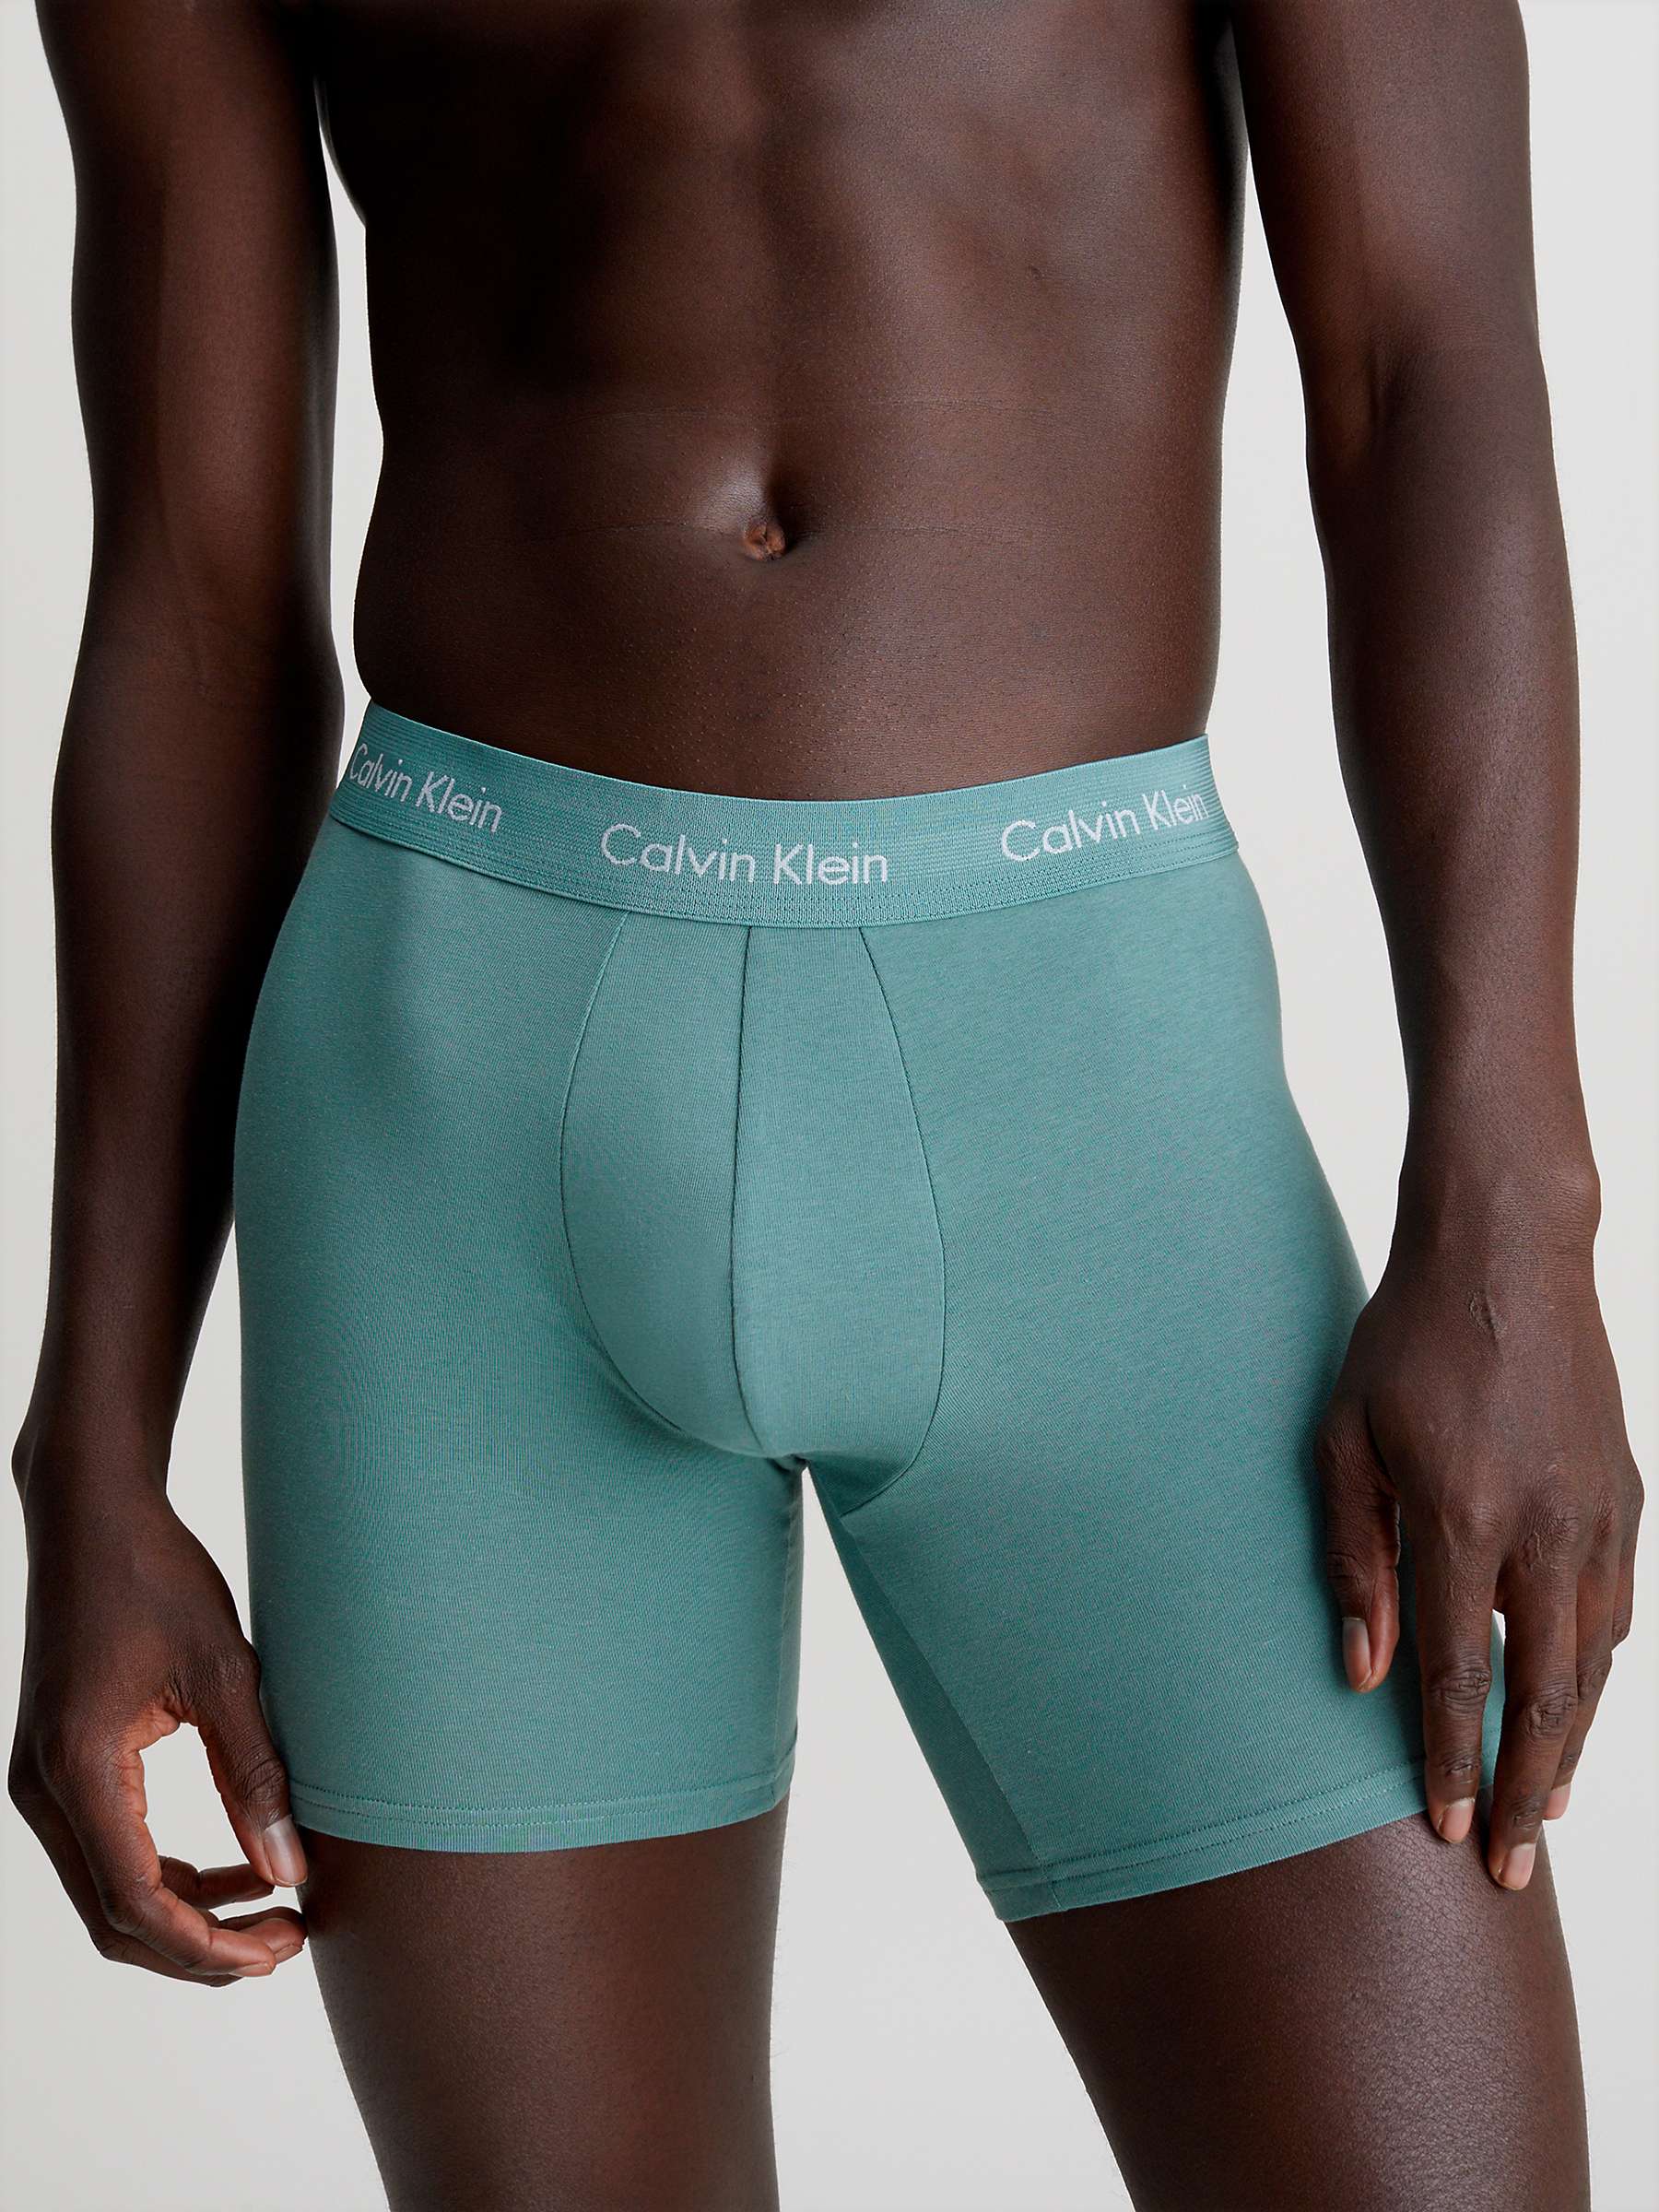 Buy Calvin Klein Logo Boxer Briefs, Pack of 3, Blue/Arona/Green Online at johnlewis.com